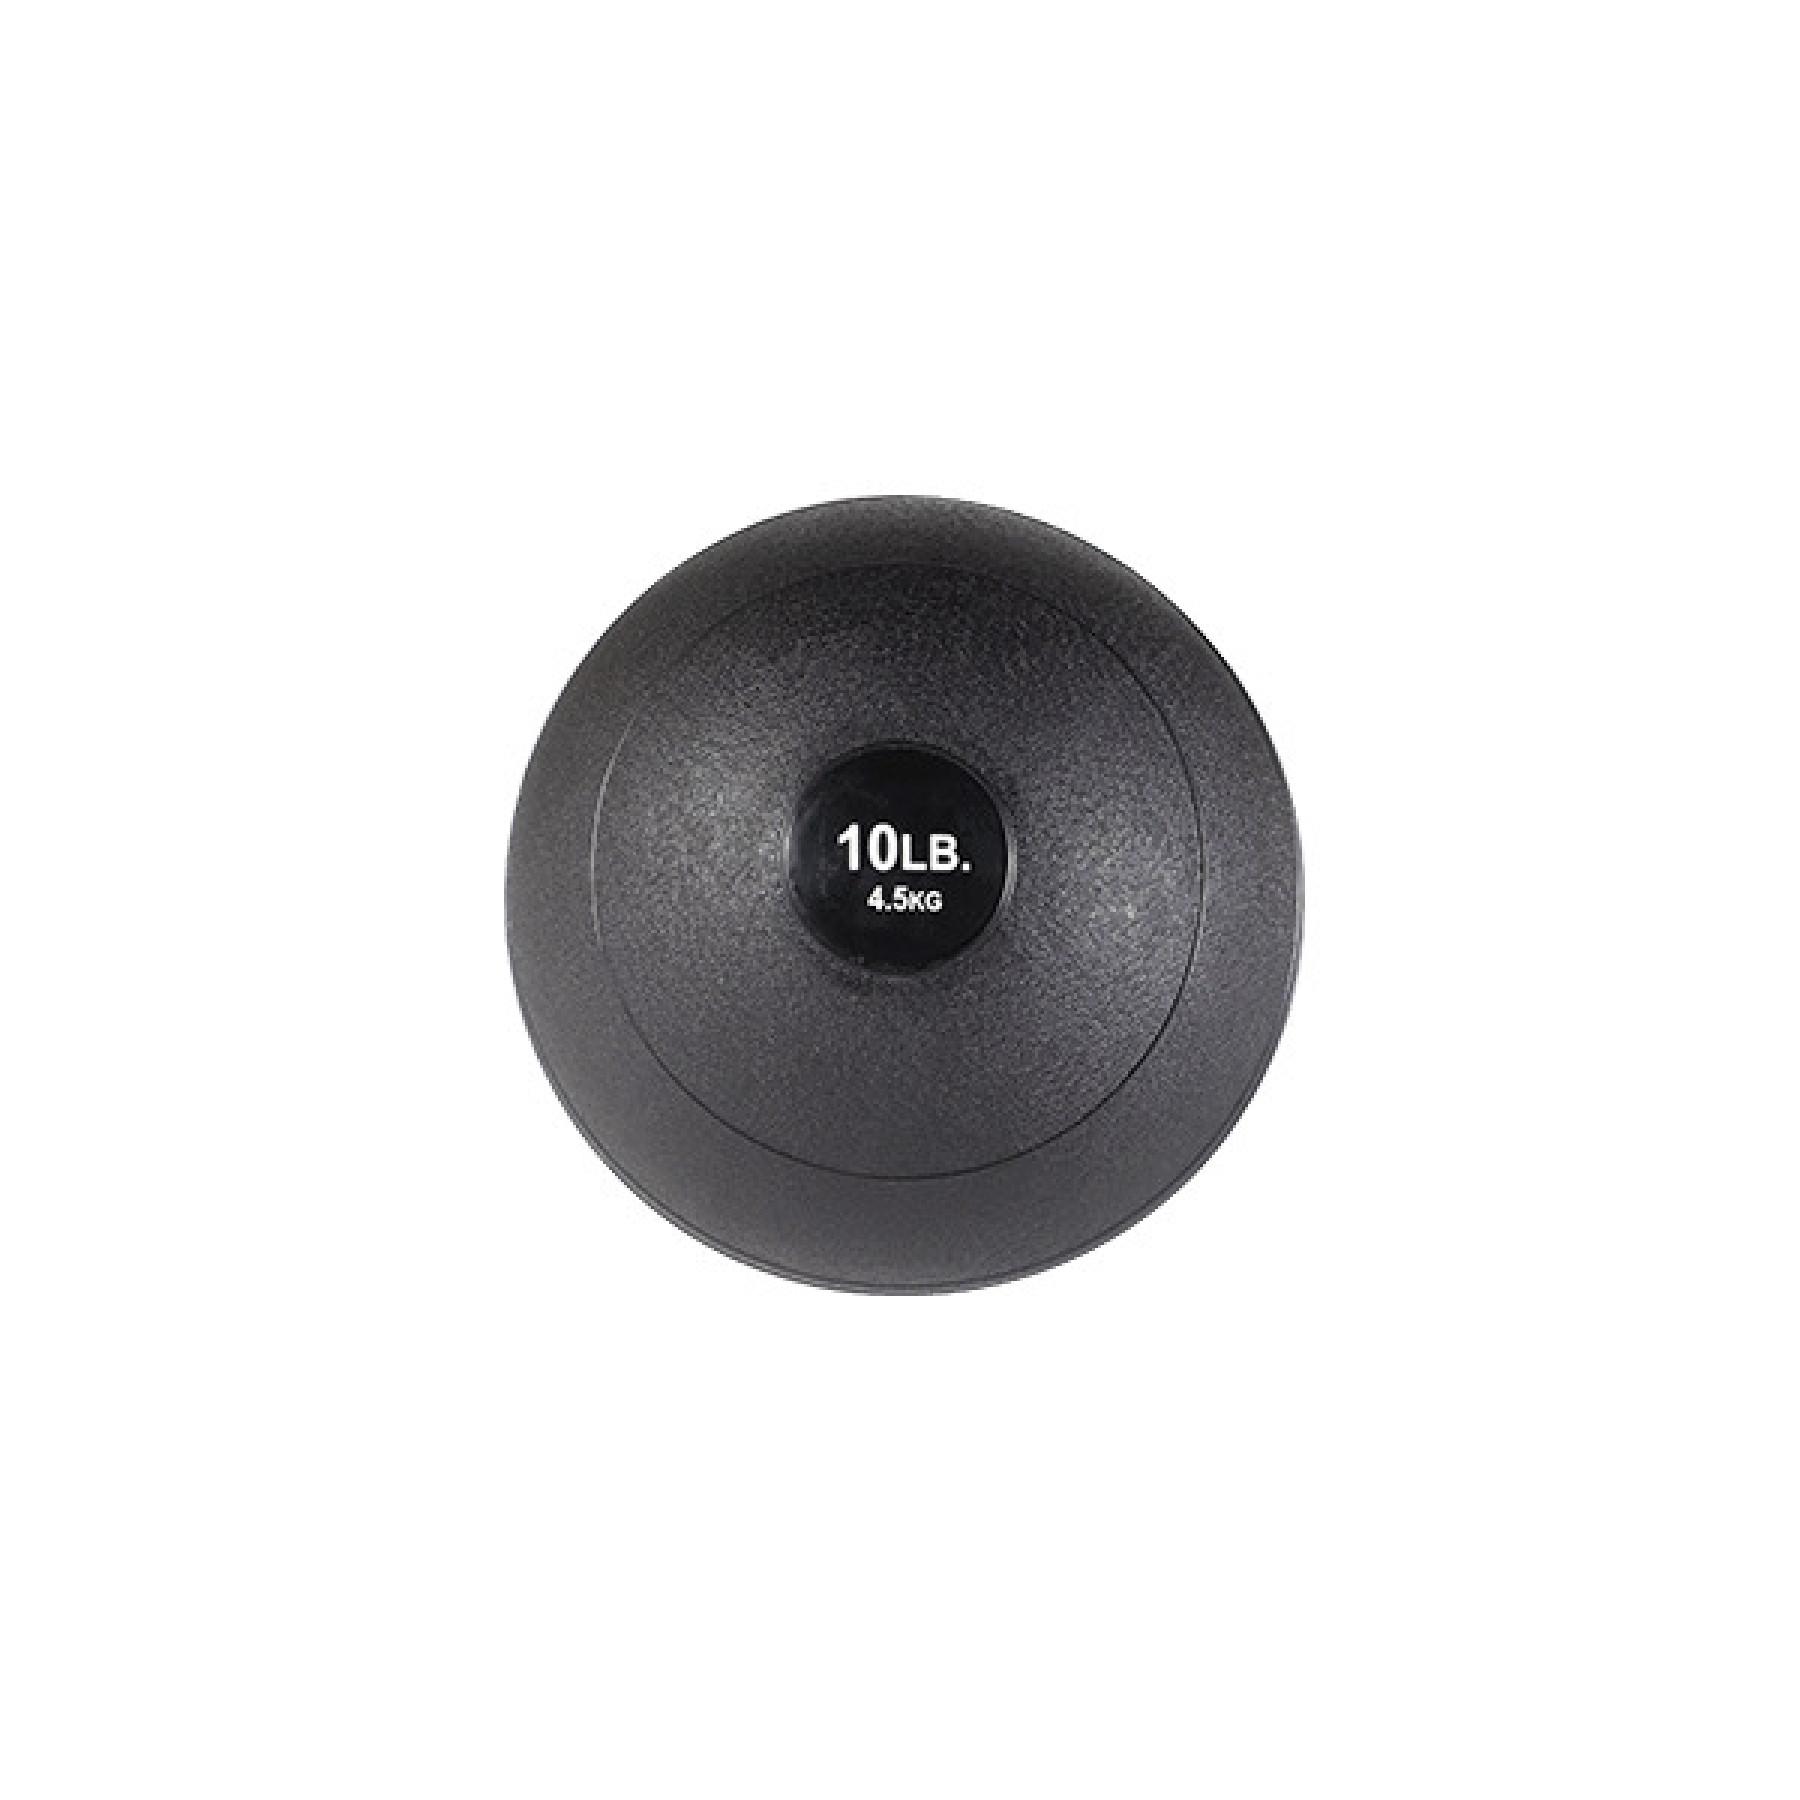 Slam ball 30 lbs - 13.6 kg Body Solid